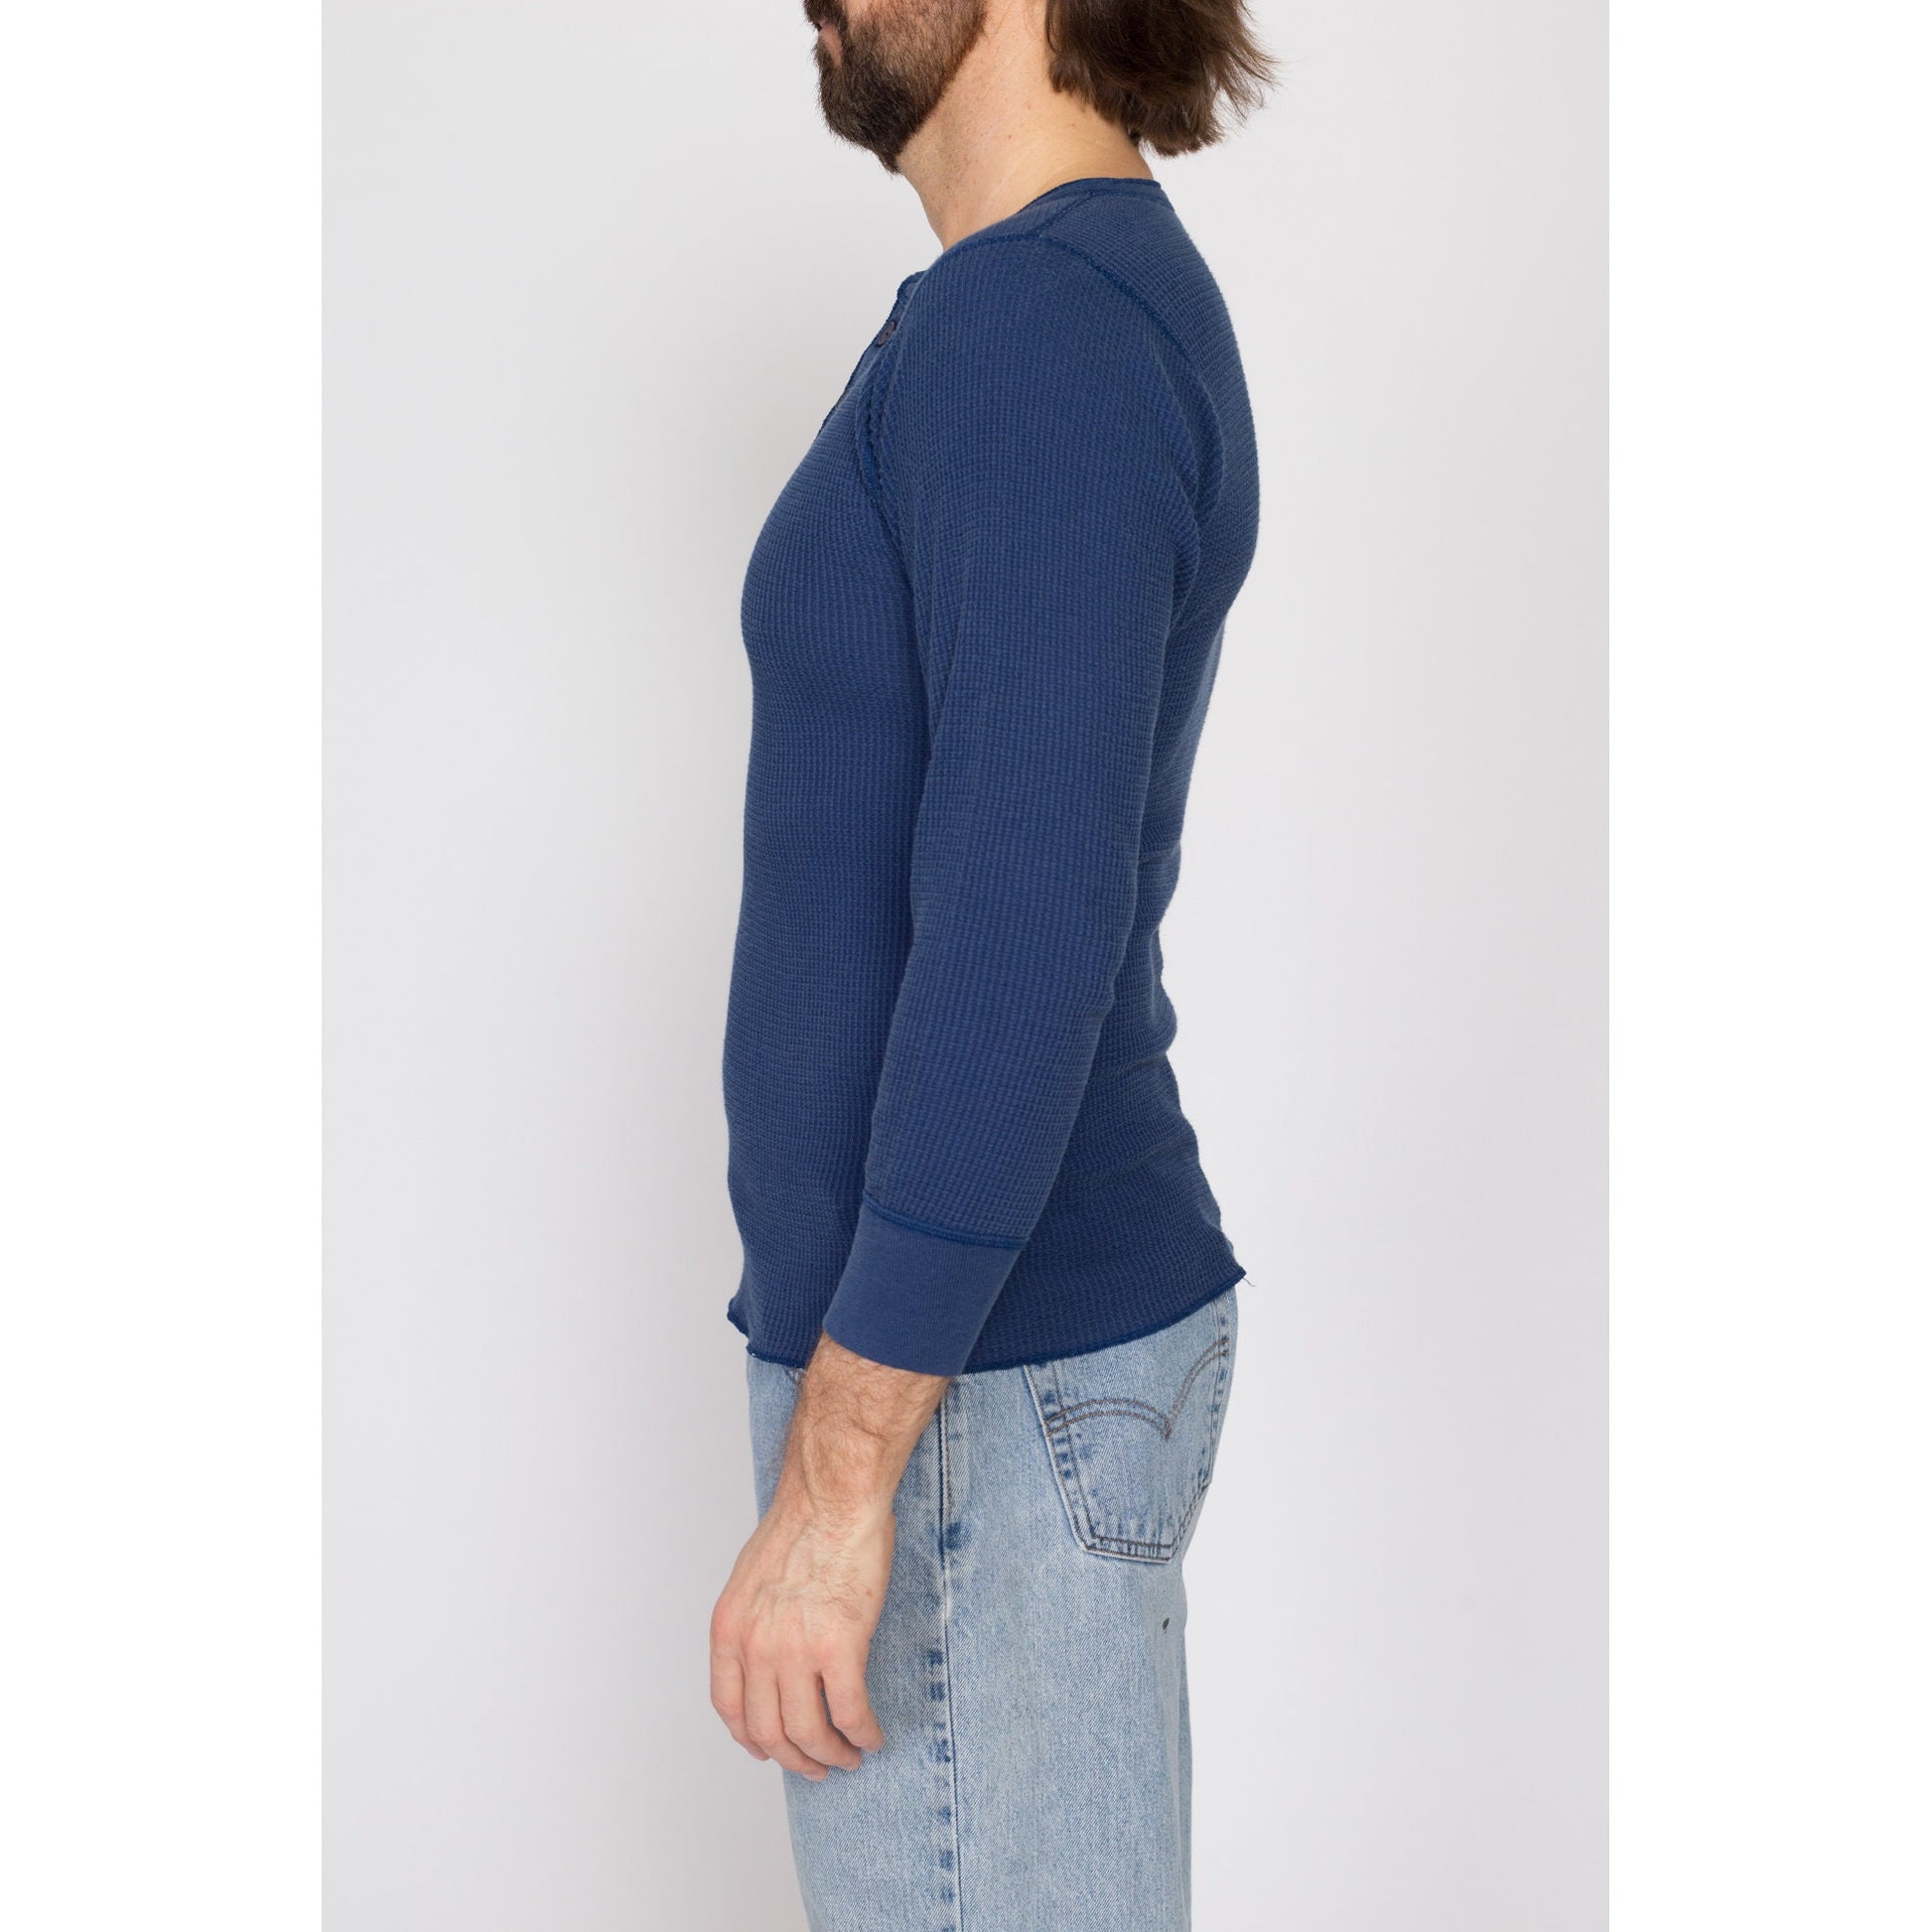 Medium 80s Navy Blue Waffle Knit Henley Shirt | Vintage Plain Long Sleeve Thermal Top